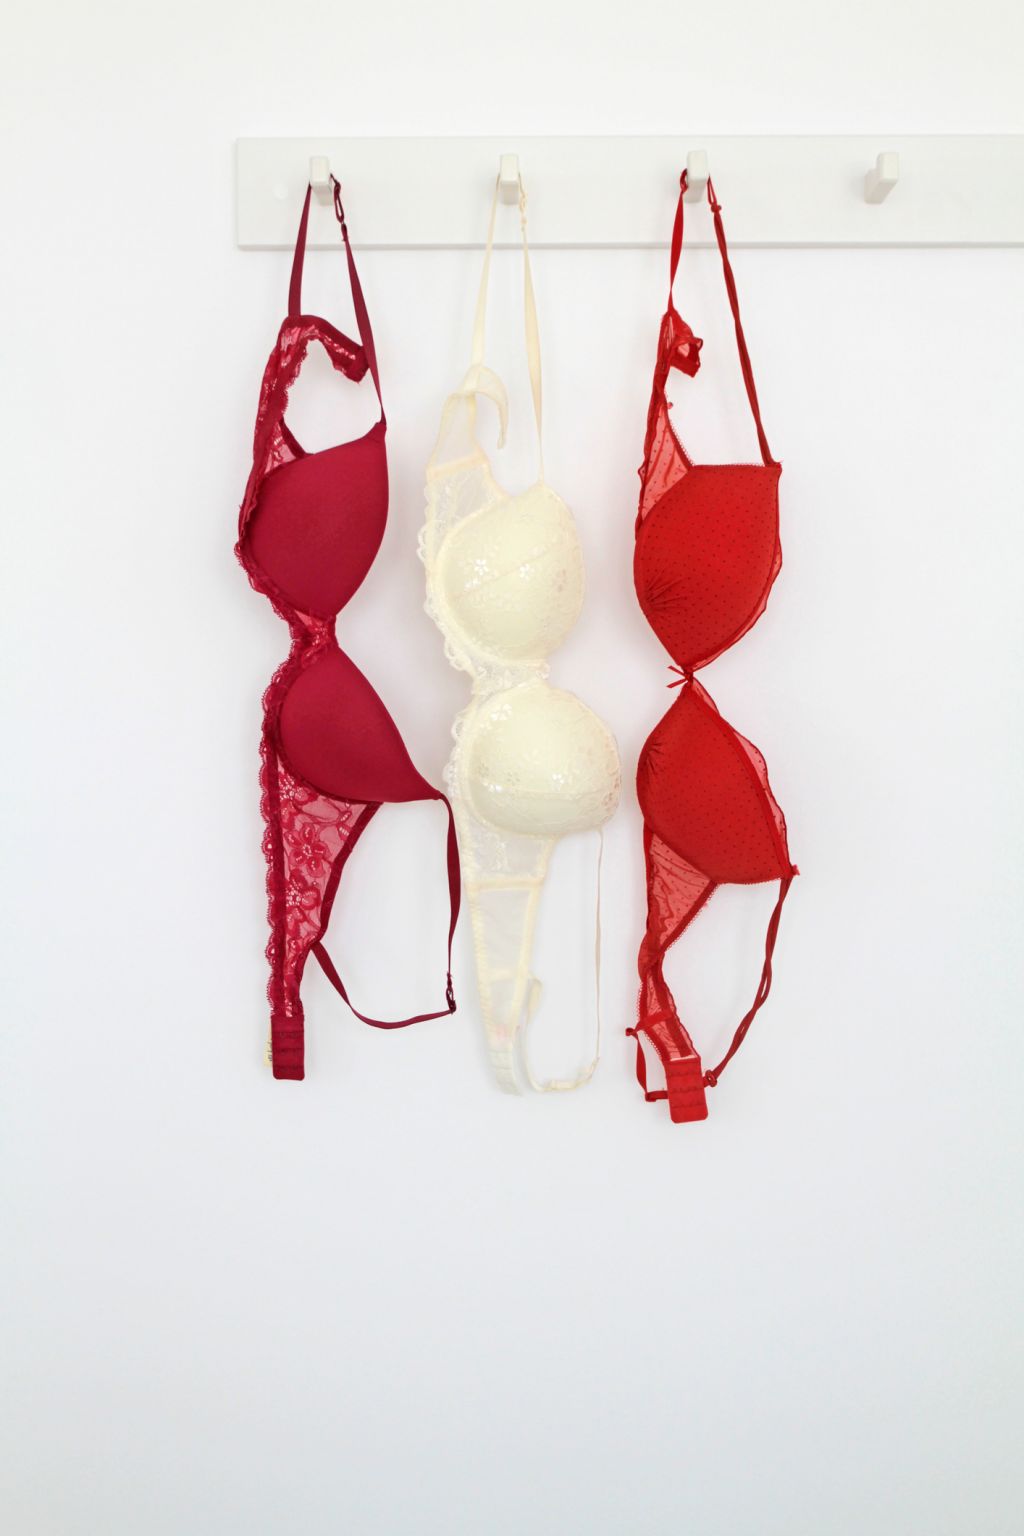 Three bras hanging on rack